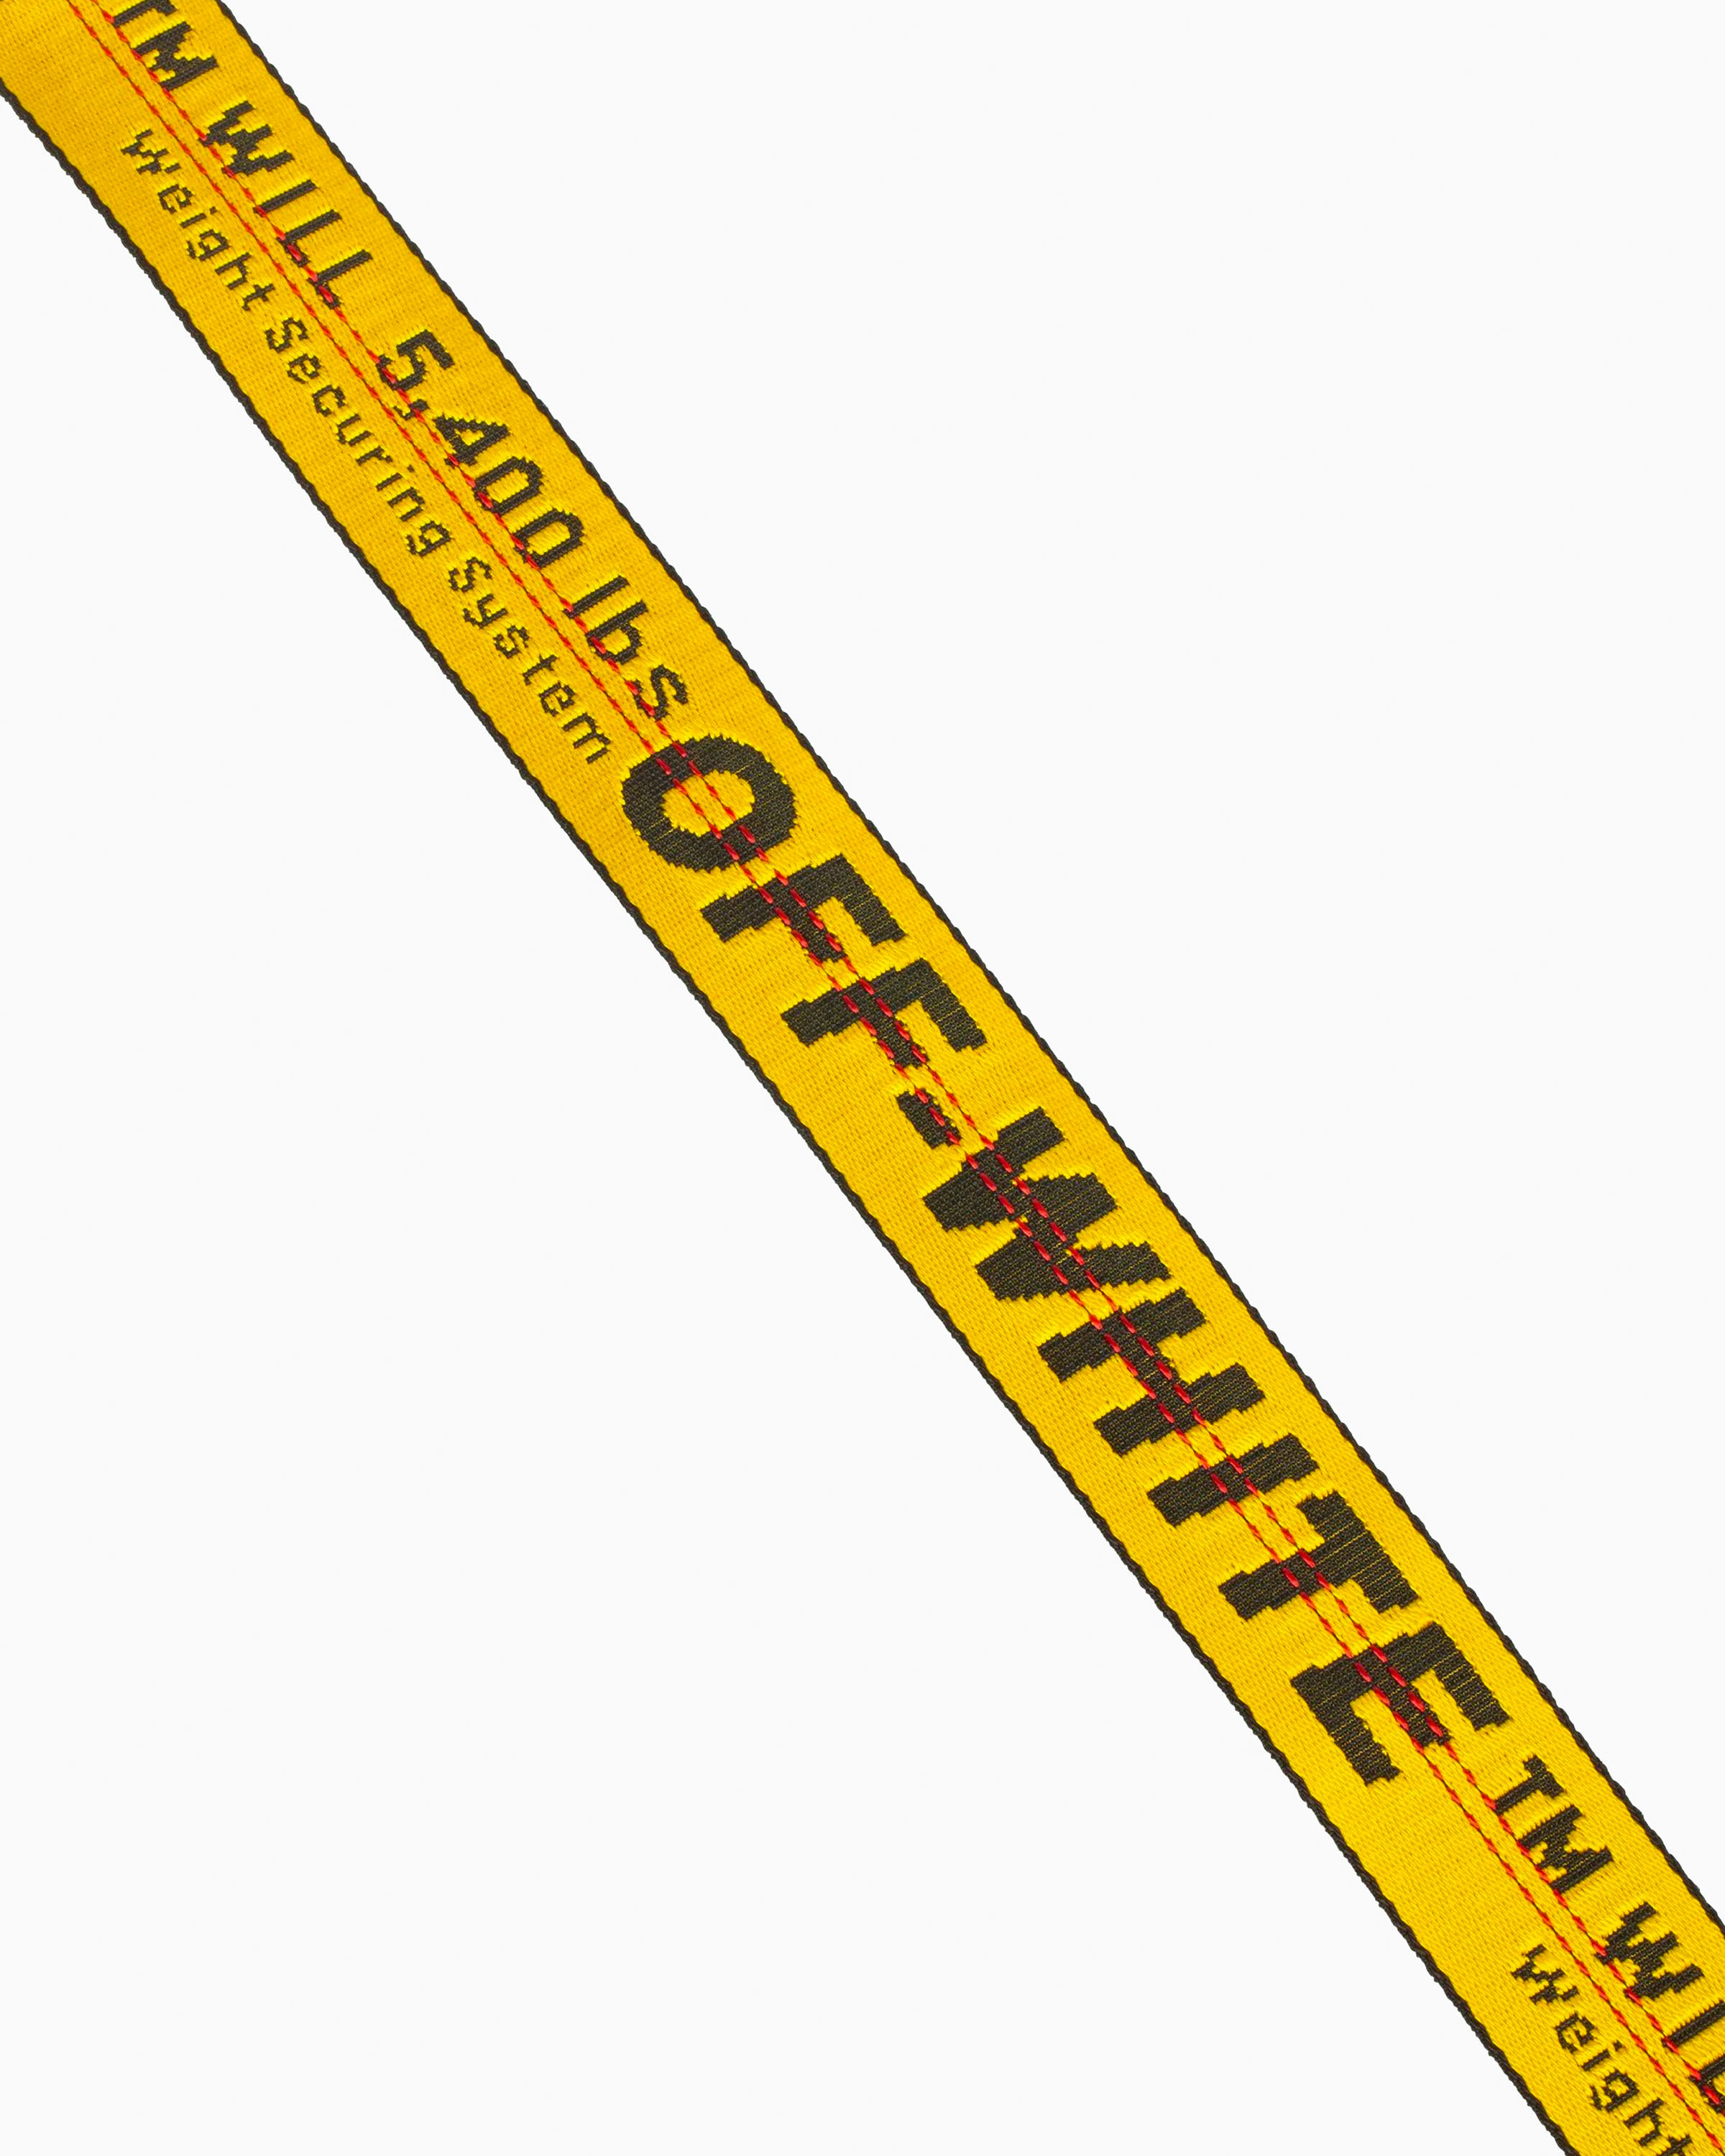 Buy Off-White Classic Industrial Belt 'Yellow/Black' - OMRB012E20FAB0011810